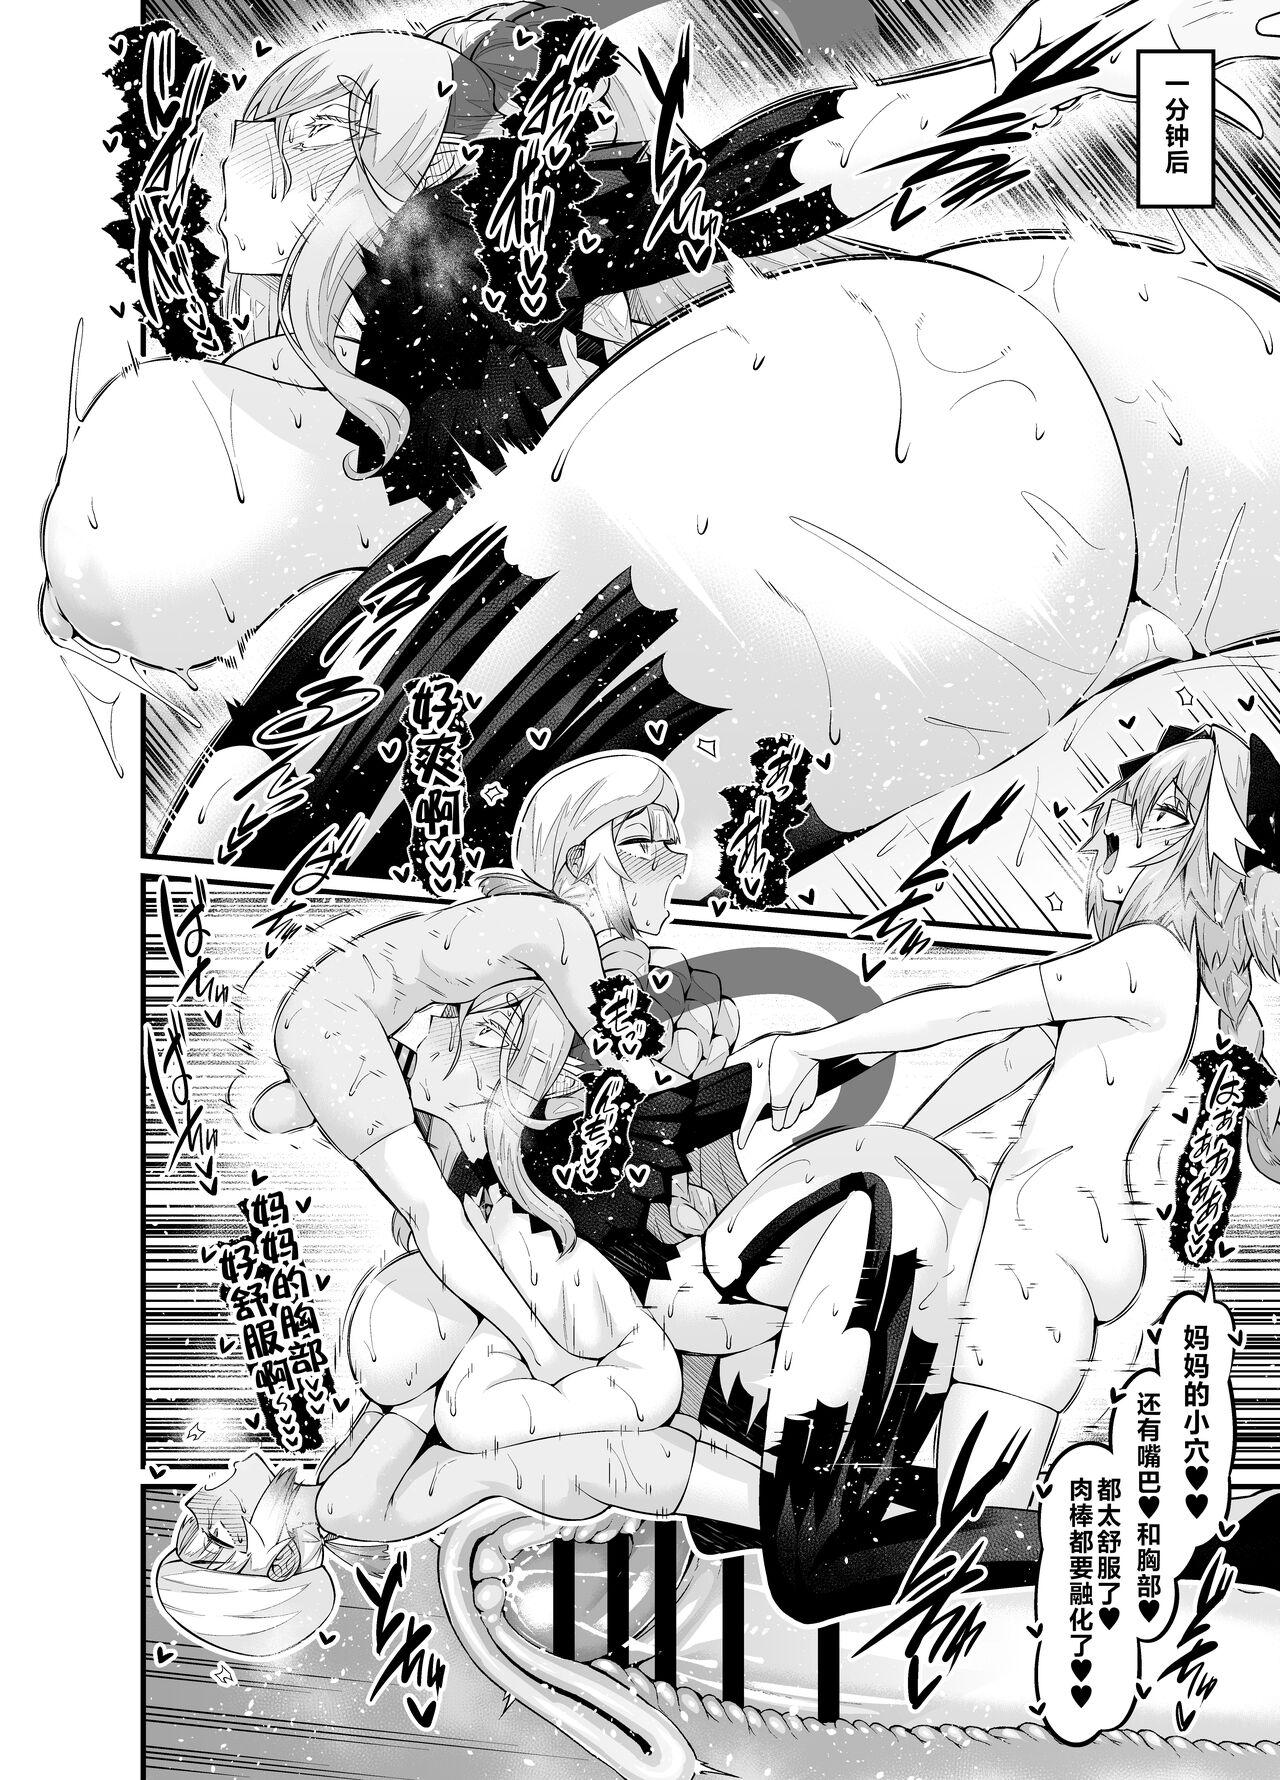 Spanking Tiamato, asutorufo to nakayoku suru - Fate grand order Hood - Page 3